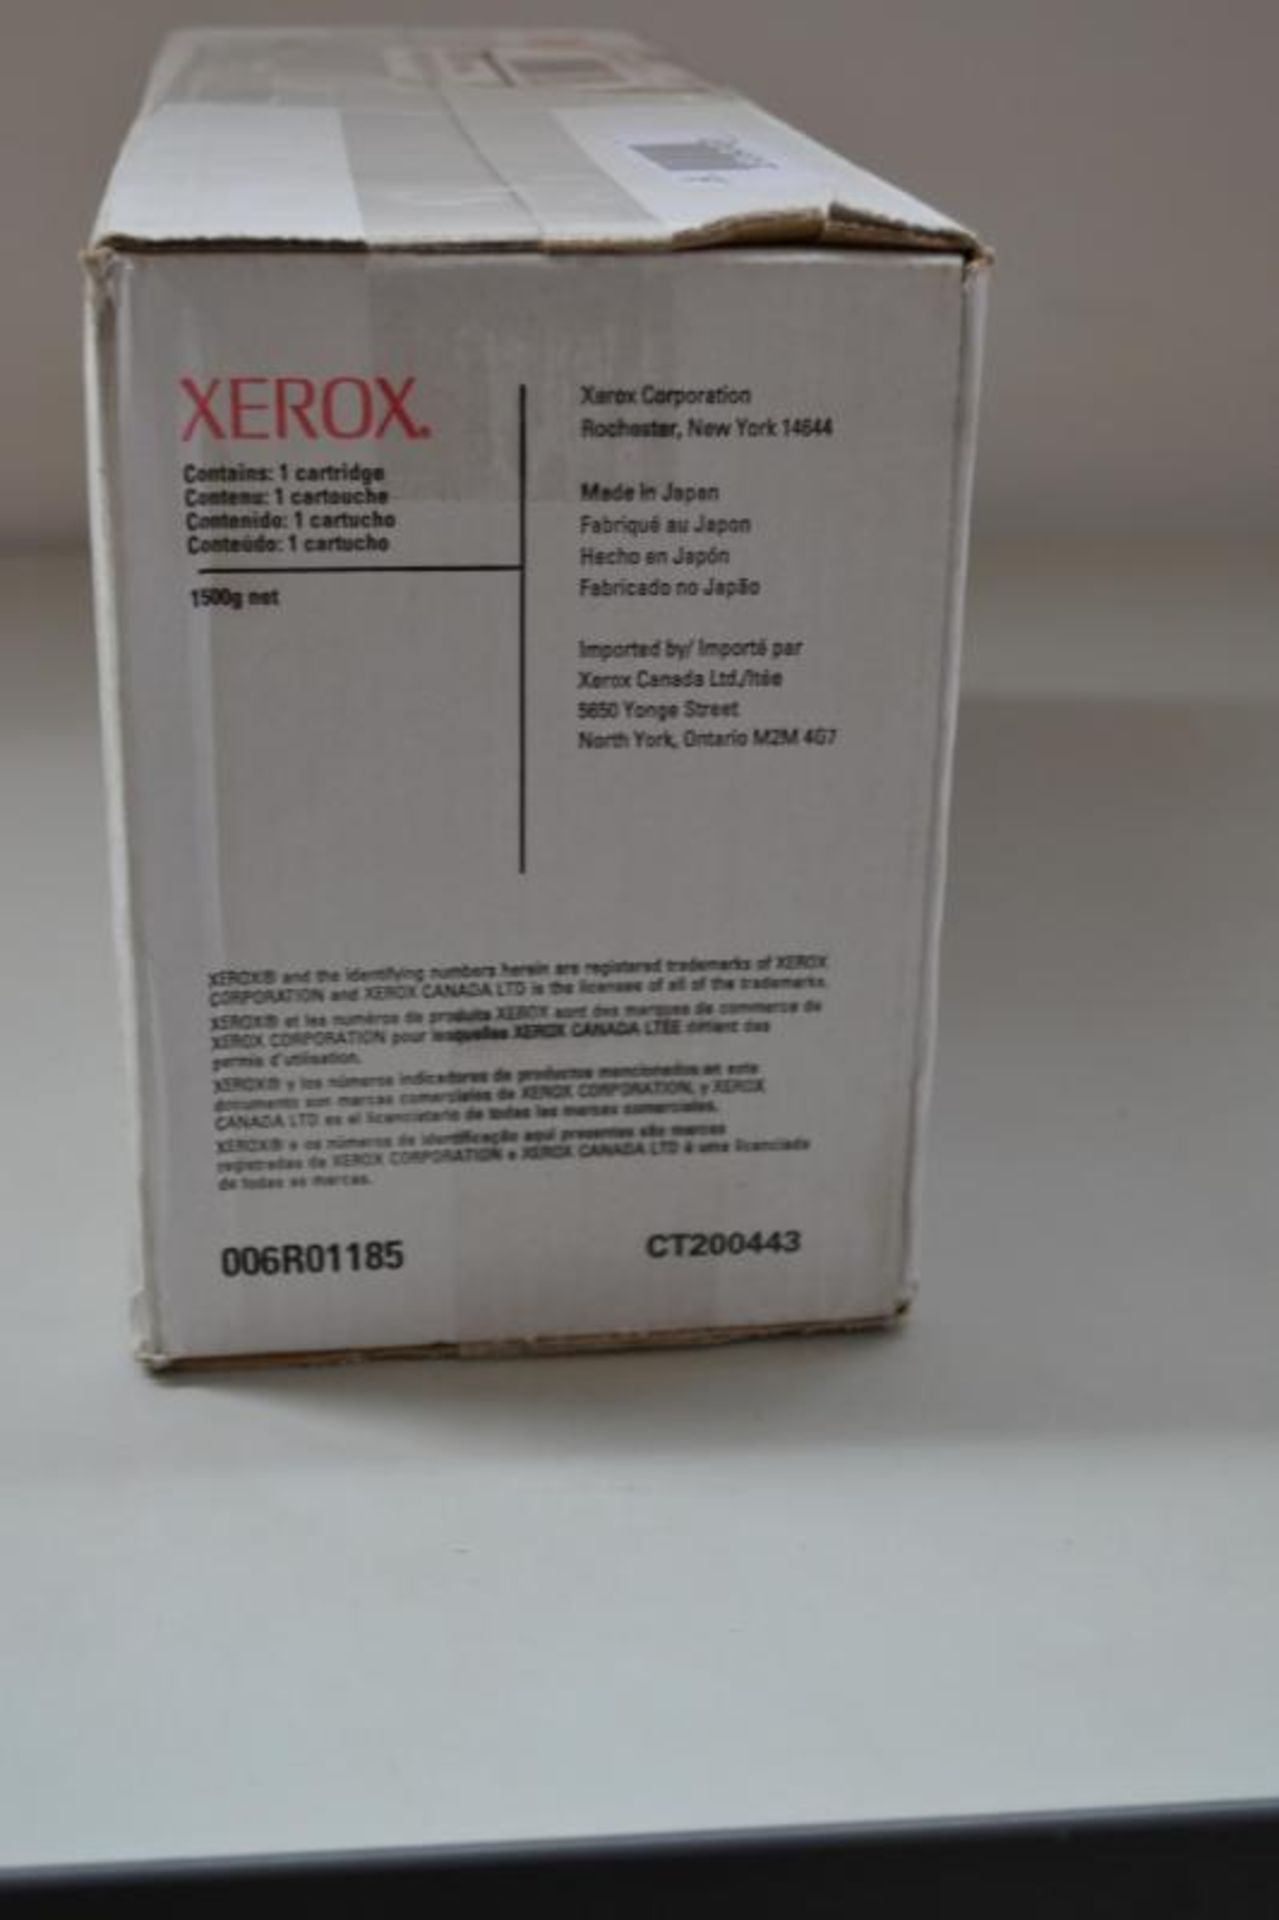 1 x Xerox 006R01185 Black Printer Toner Cartridge for 6030/6050 - New In Box - Ref J2199 - CL394 - L - Image 2 of 3